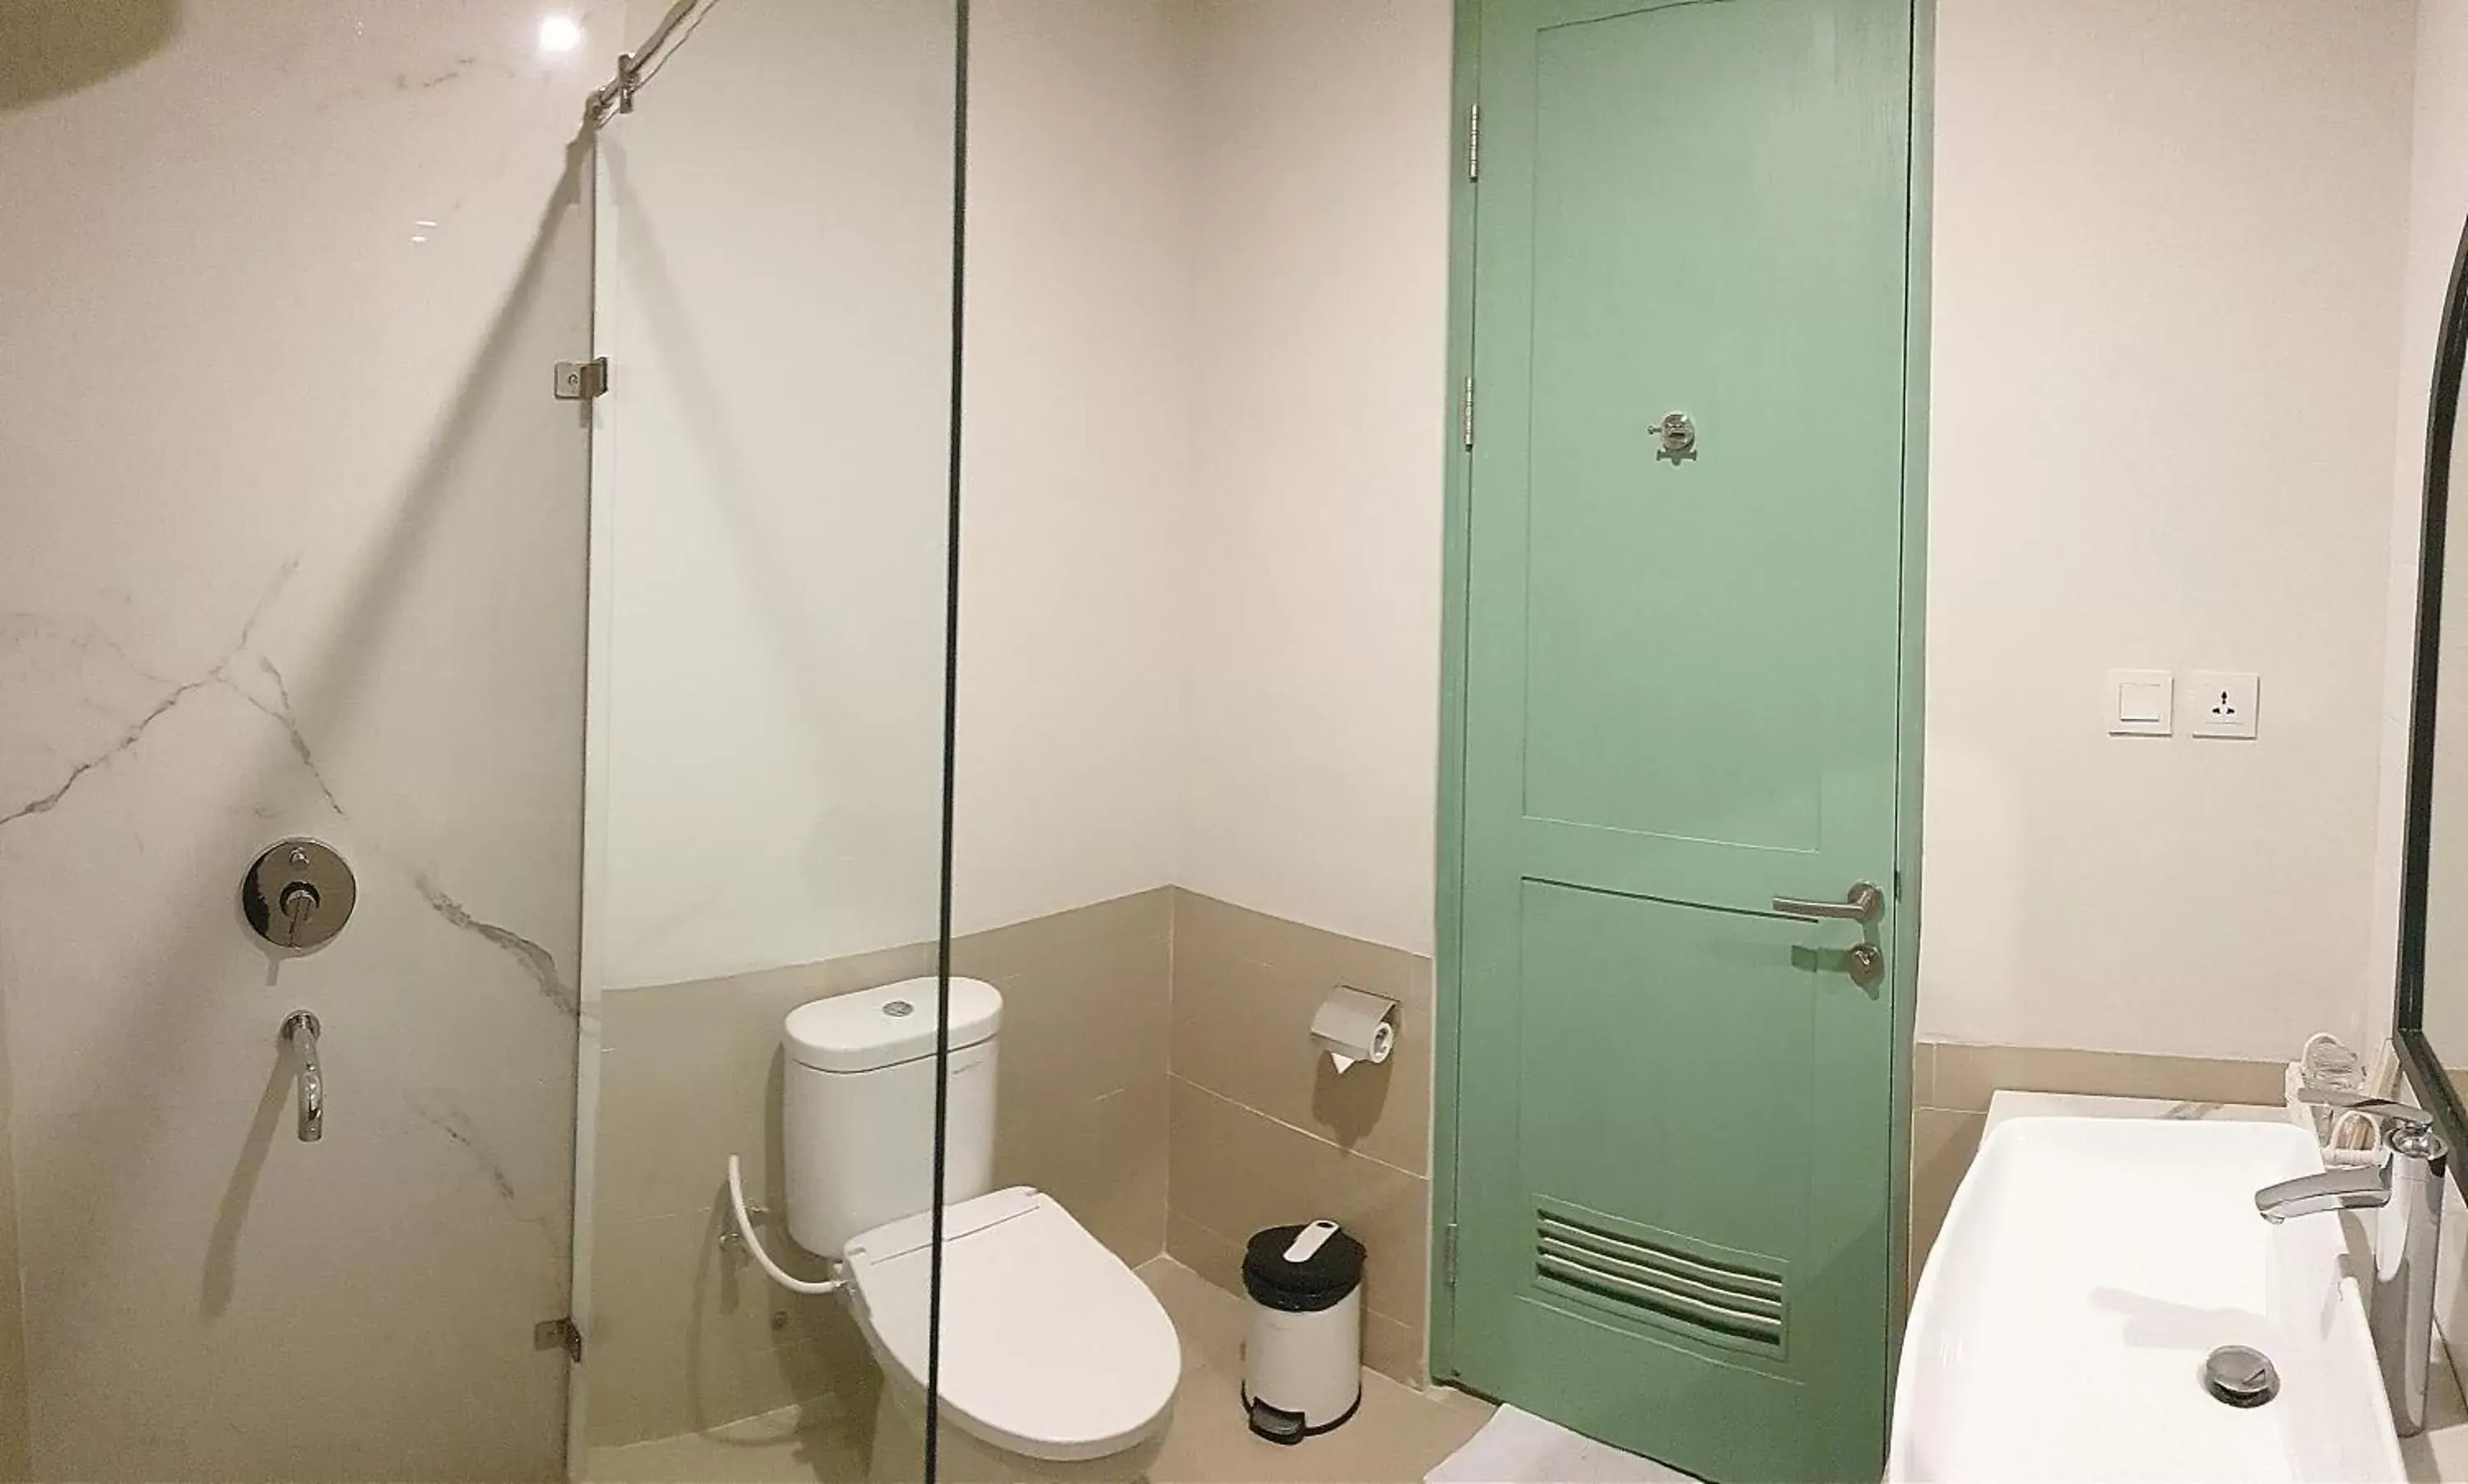 Bathroom in Jambuluwuk Thamrin Hotel